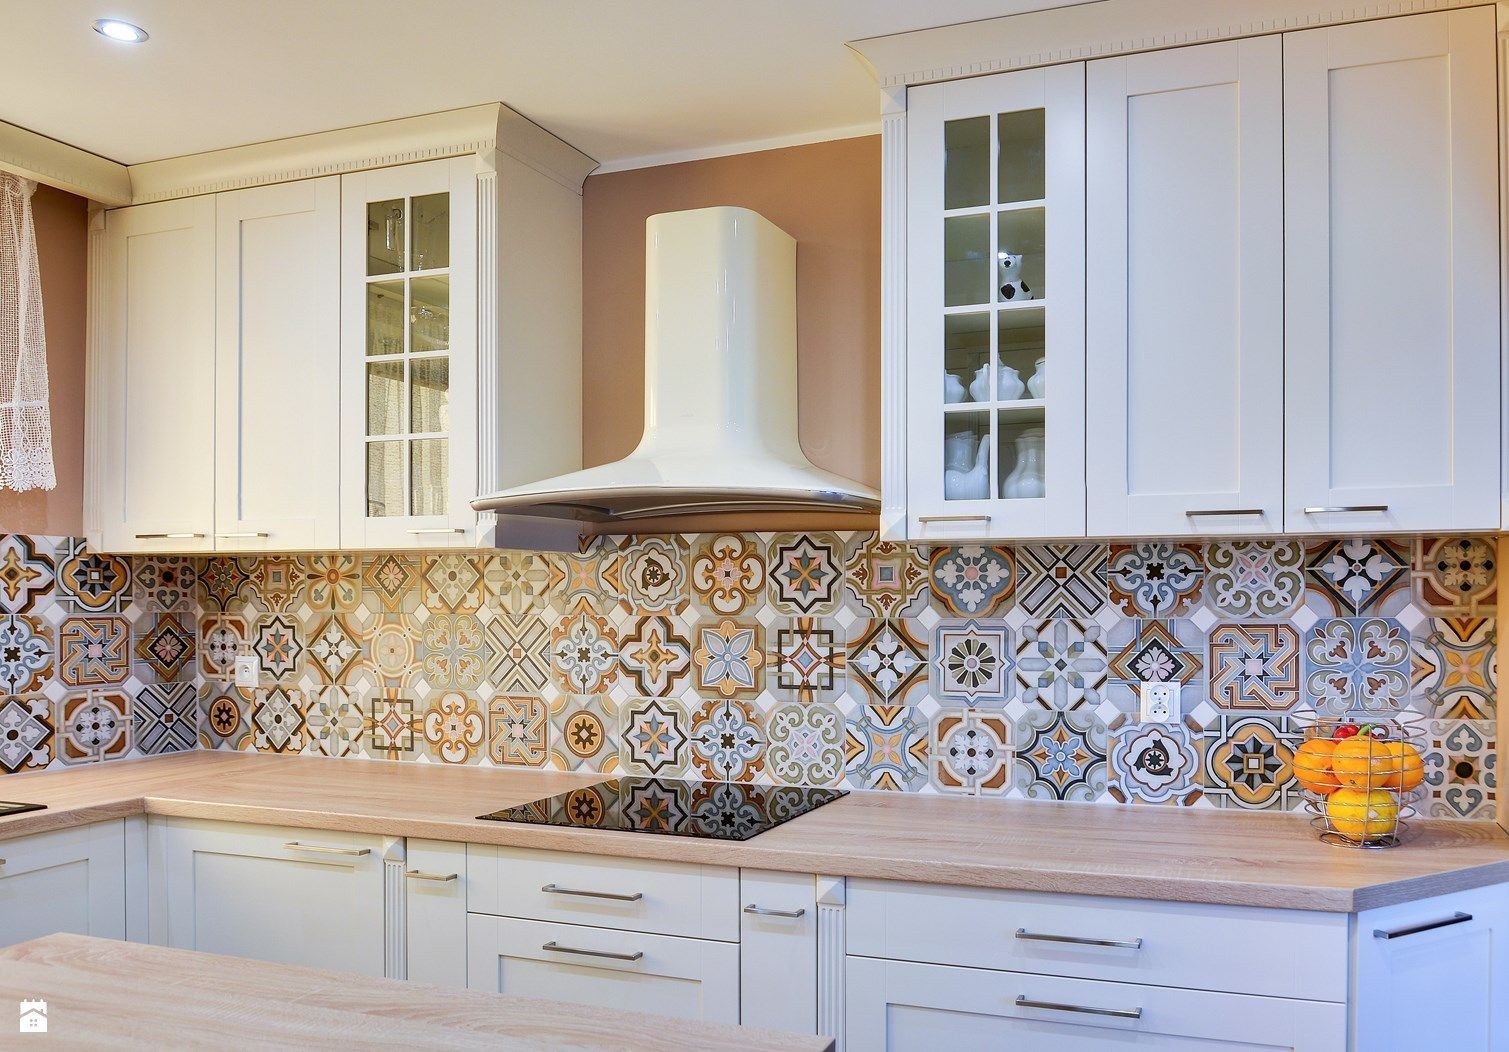 Kitchen Ideas with White Brick Backsplash Fresh Backsplash Designs Home Decorating Ideas Design and